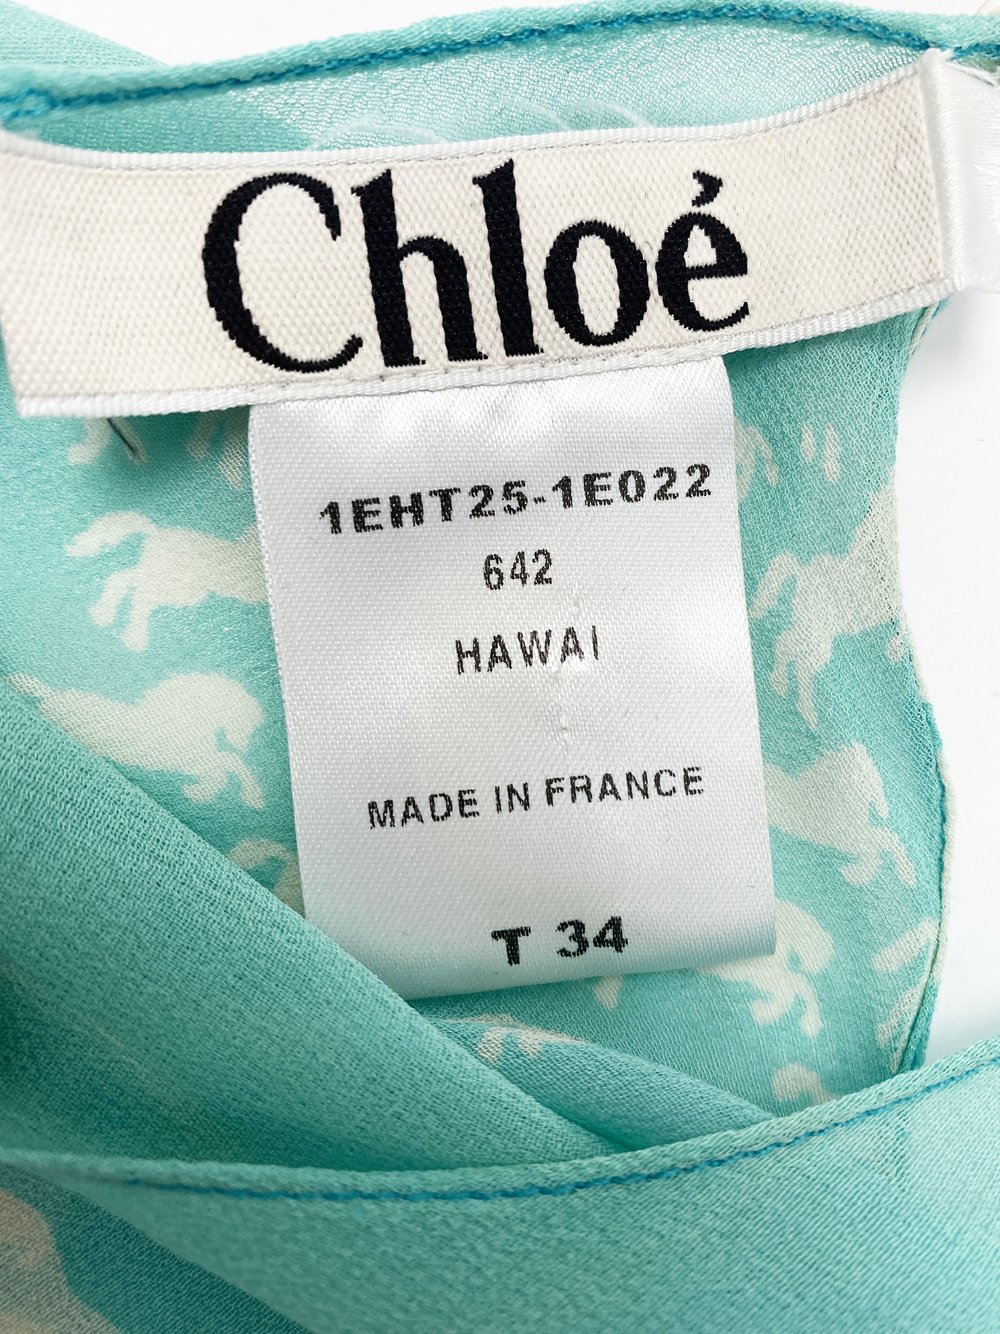 Chloe S/S 2001 horse print silk top — JAMES VELORIA